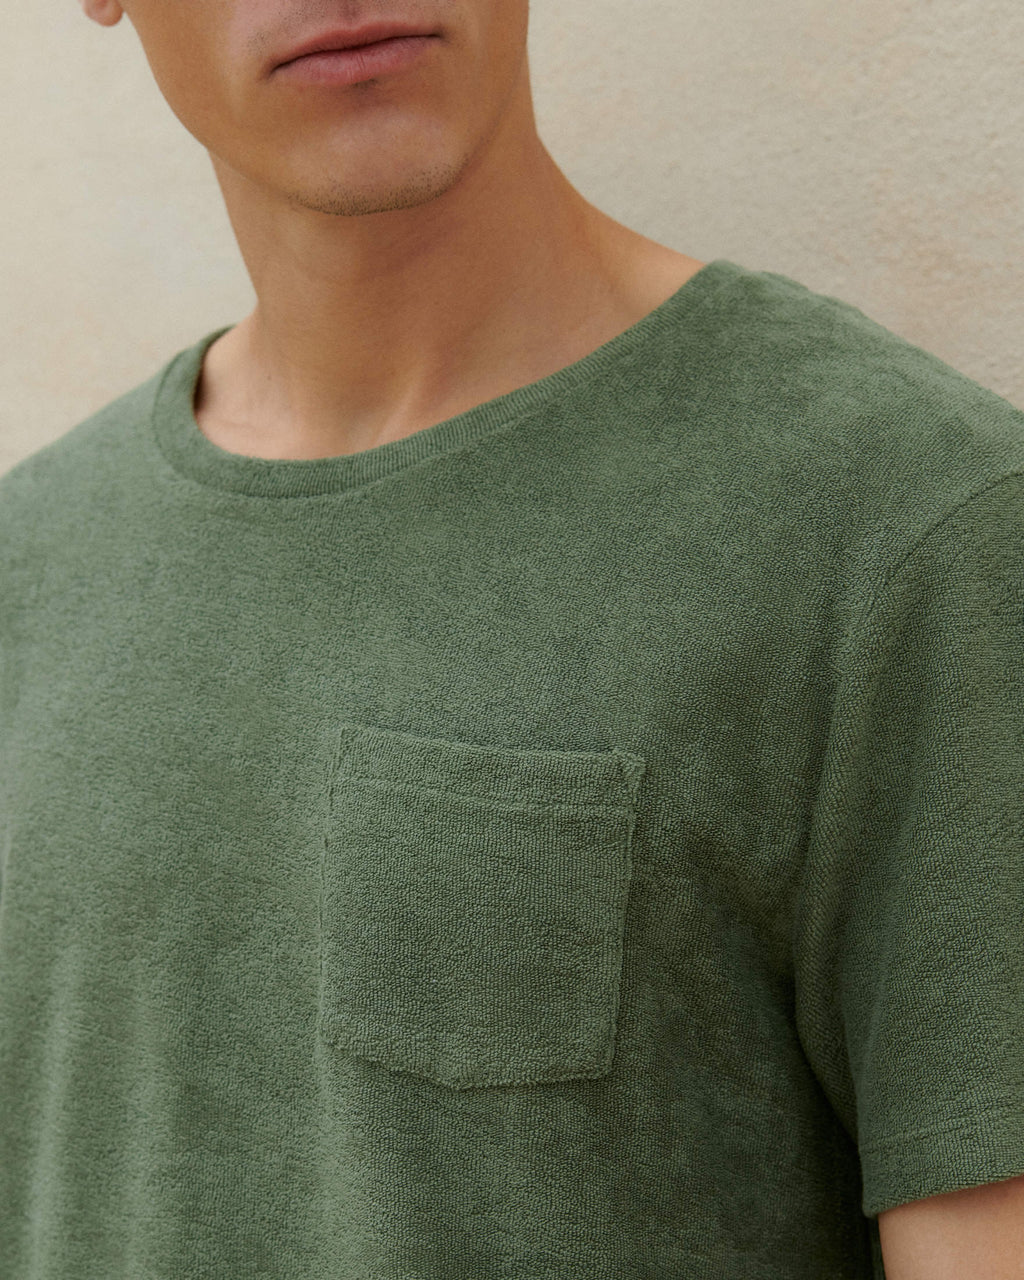 Emilio T-Shirt - Made in Portugal - Kaki Terry Cotton